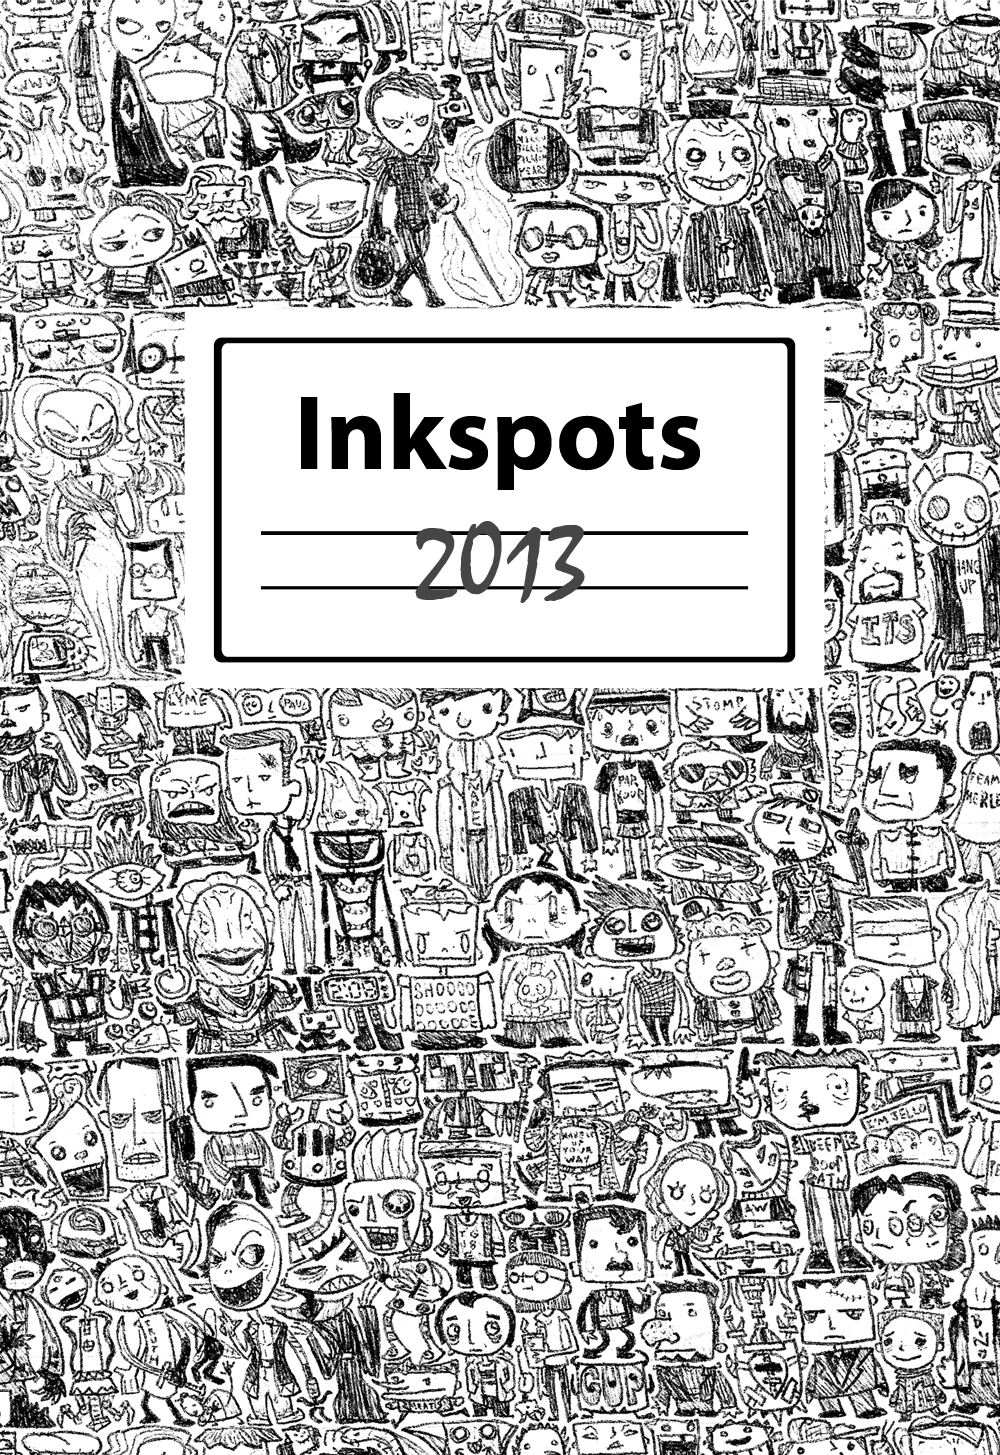 Inkspots 2013